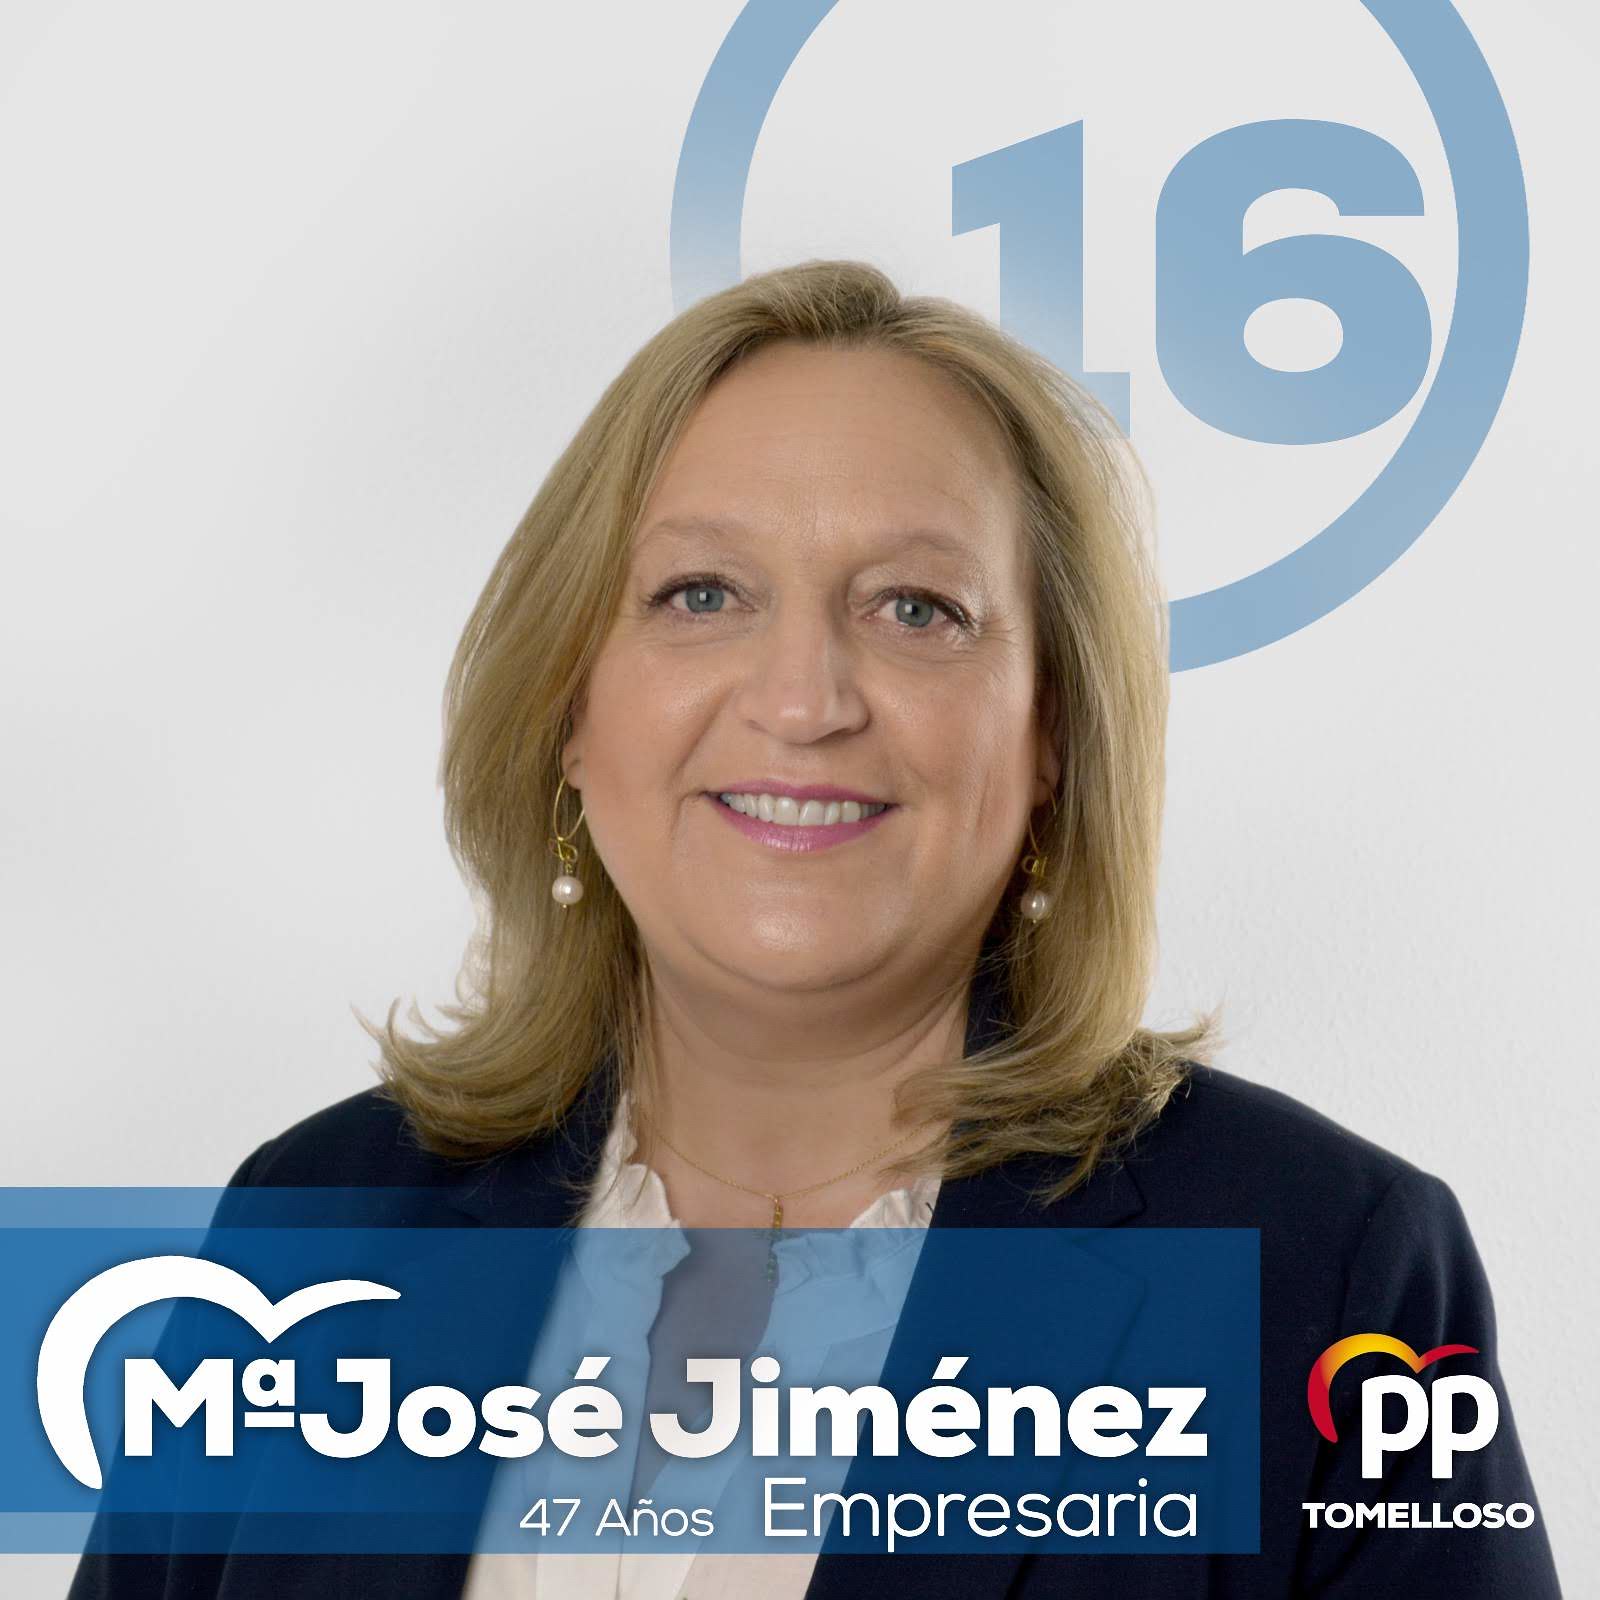 maria-jose-jimenez-pp-tomelloso